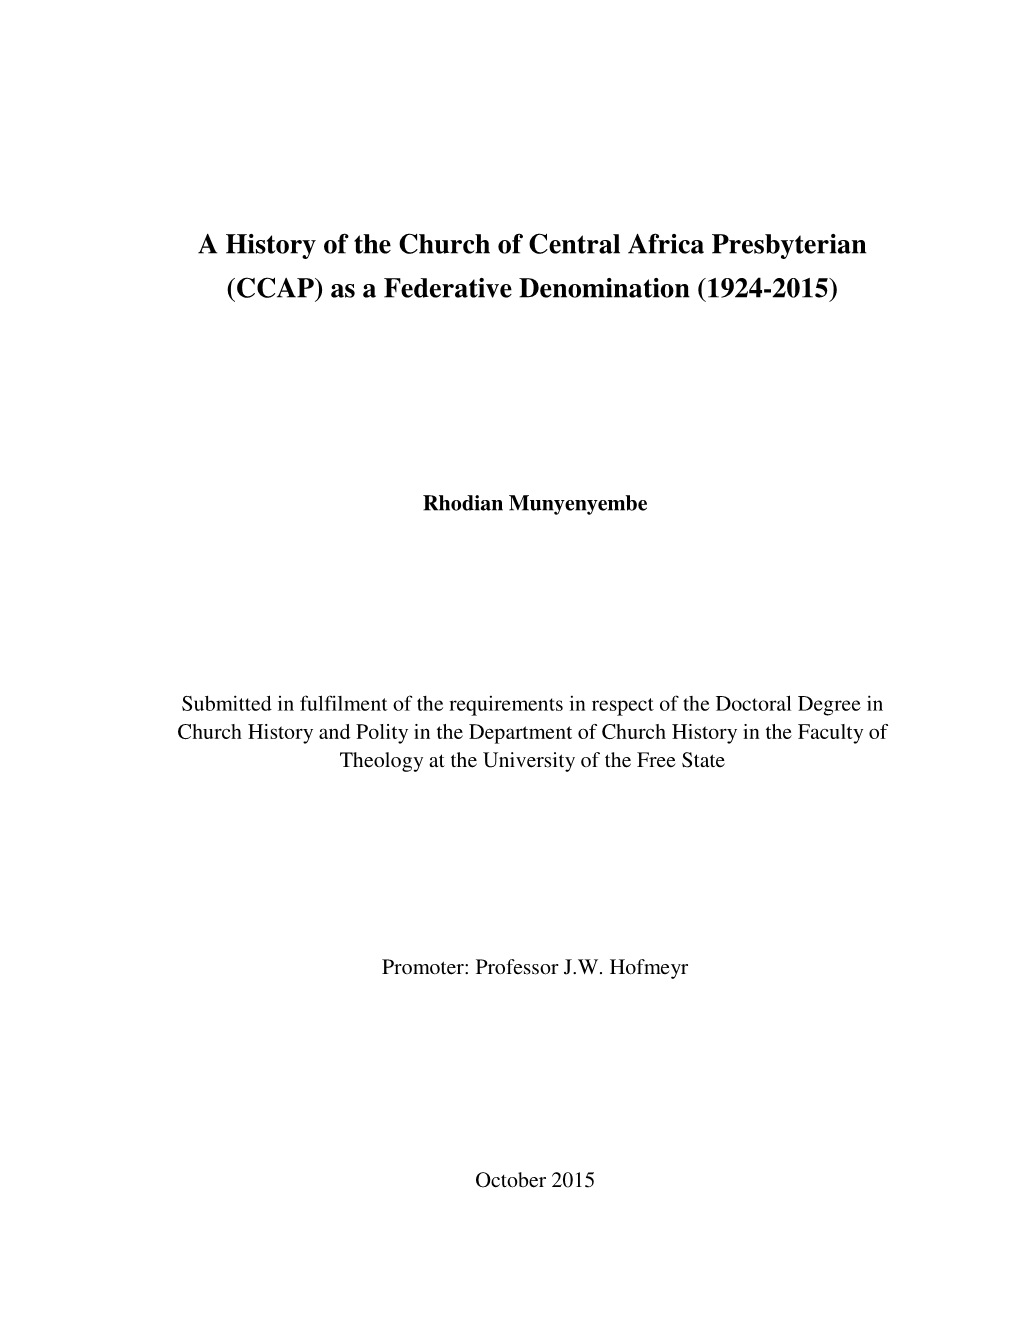 A History of the Church of Central Africa Presbyterian (CCAP) As a Federative Denomination (1924-2015)